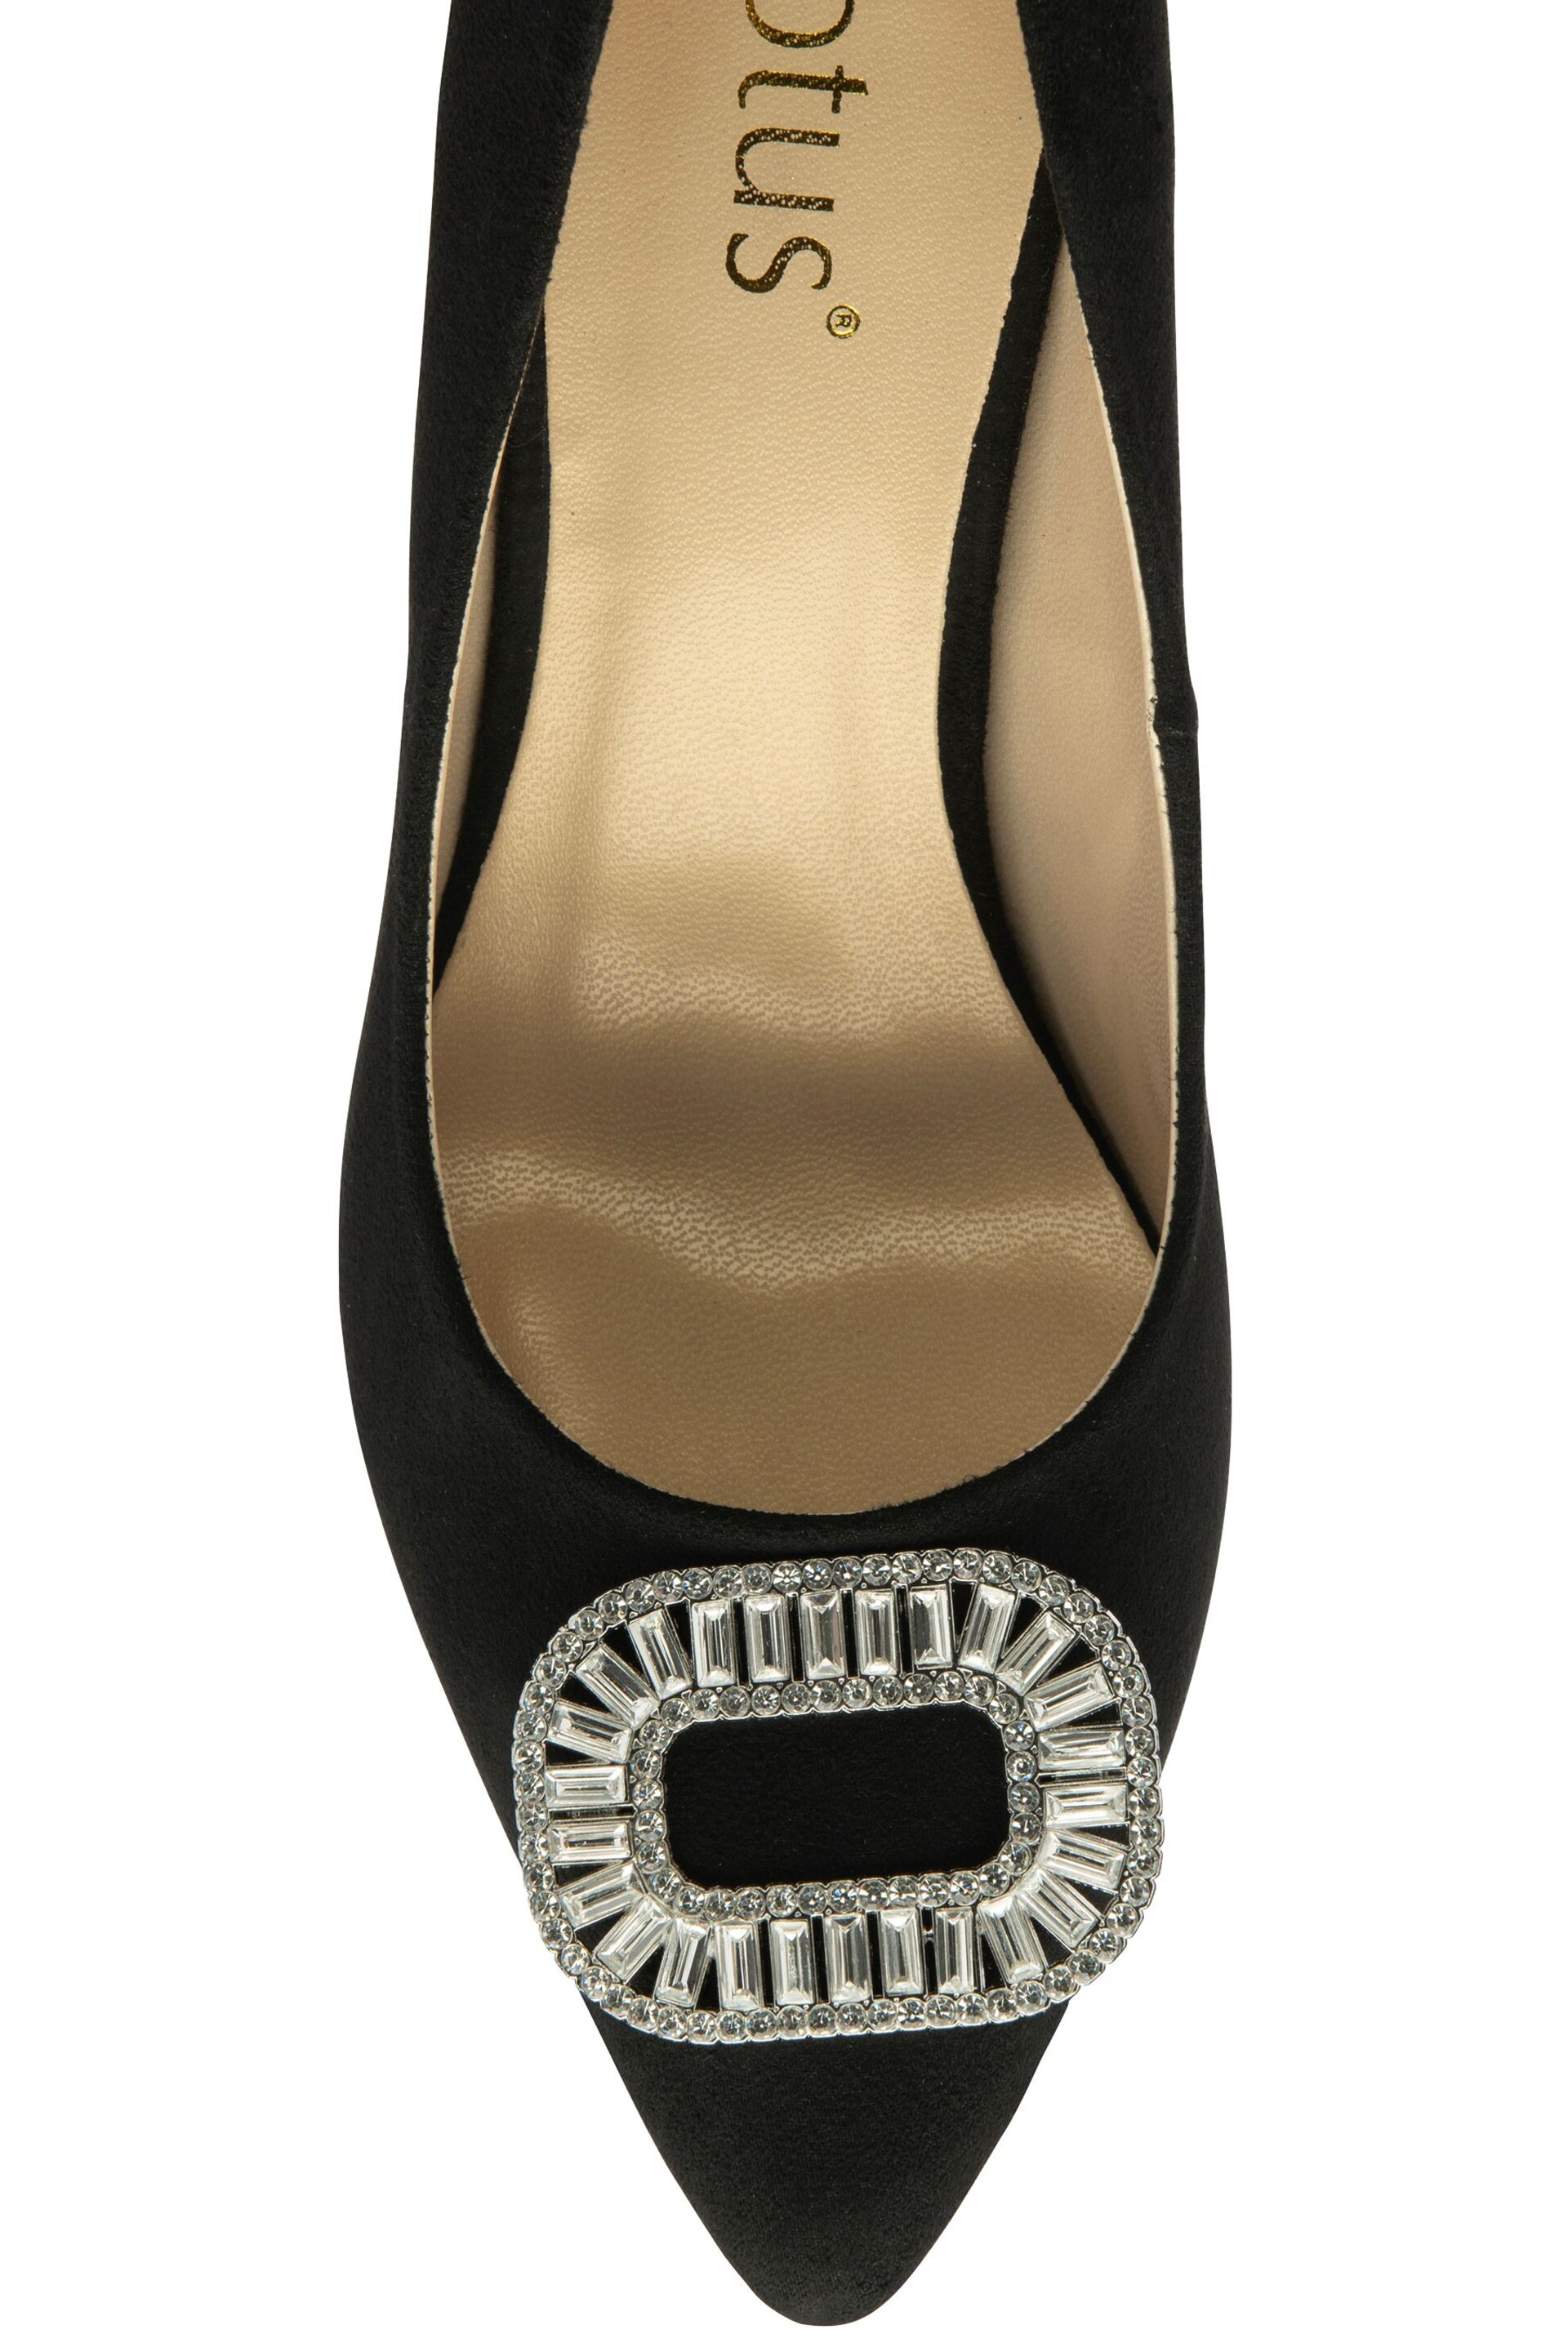 Lotus Black Stiletto Heel Court Shoes - Image 4 of 4